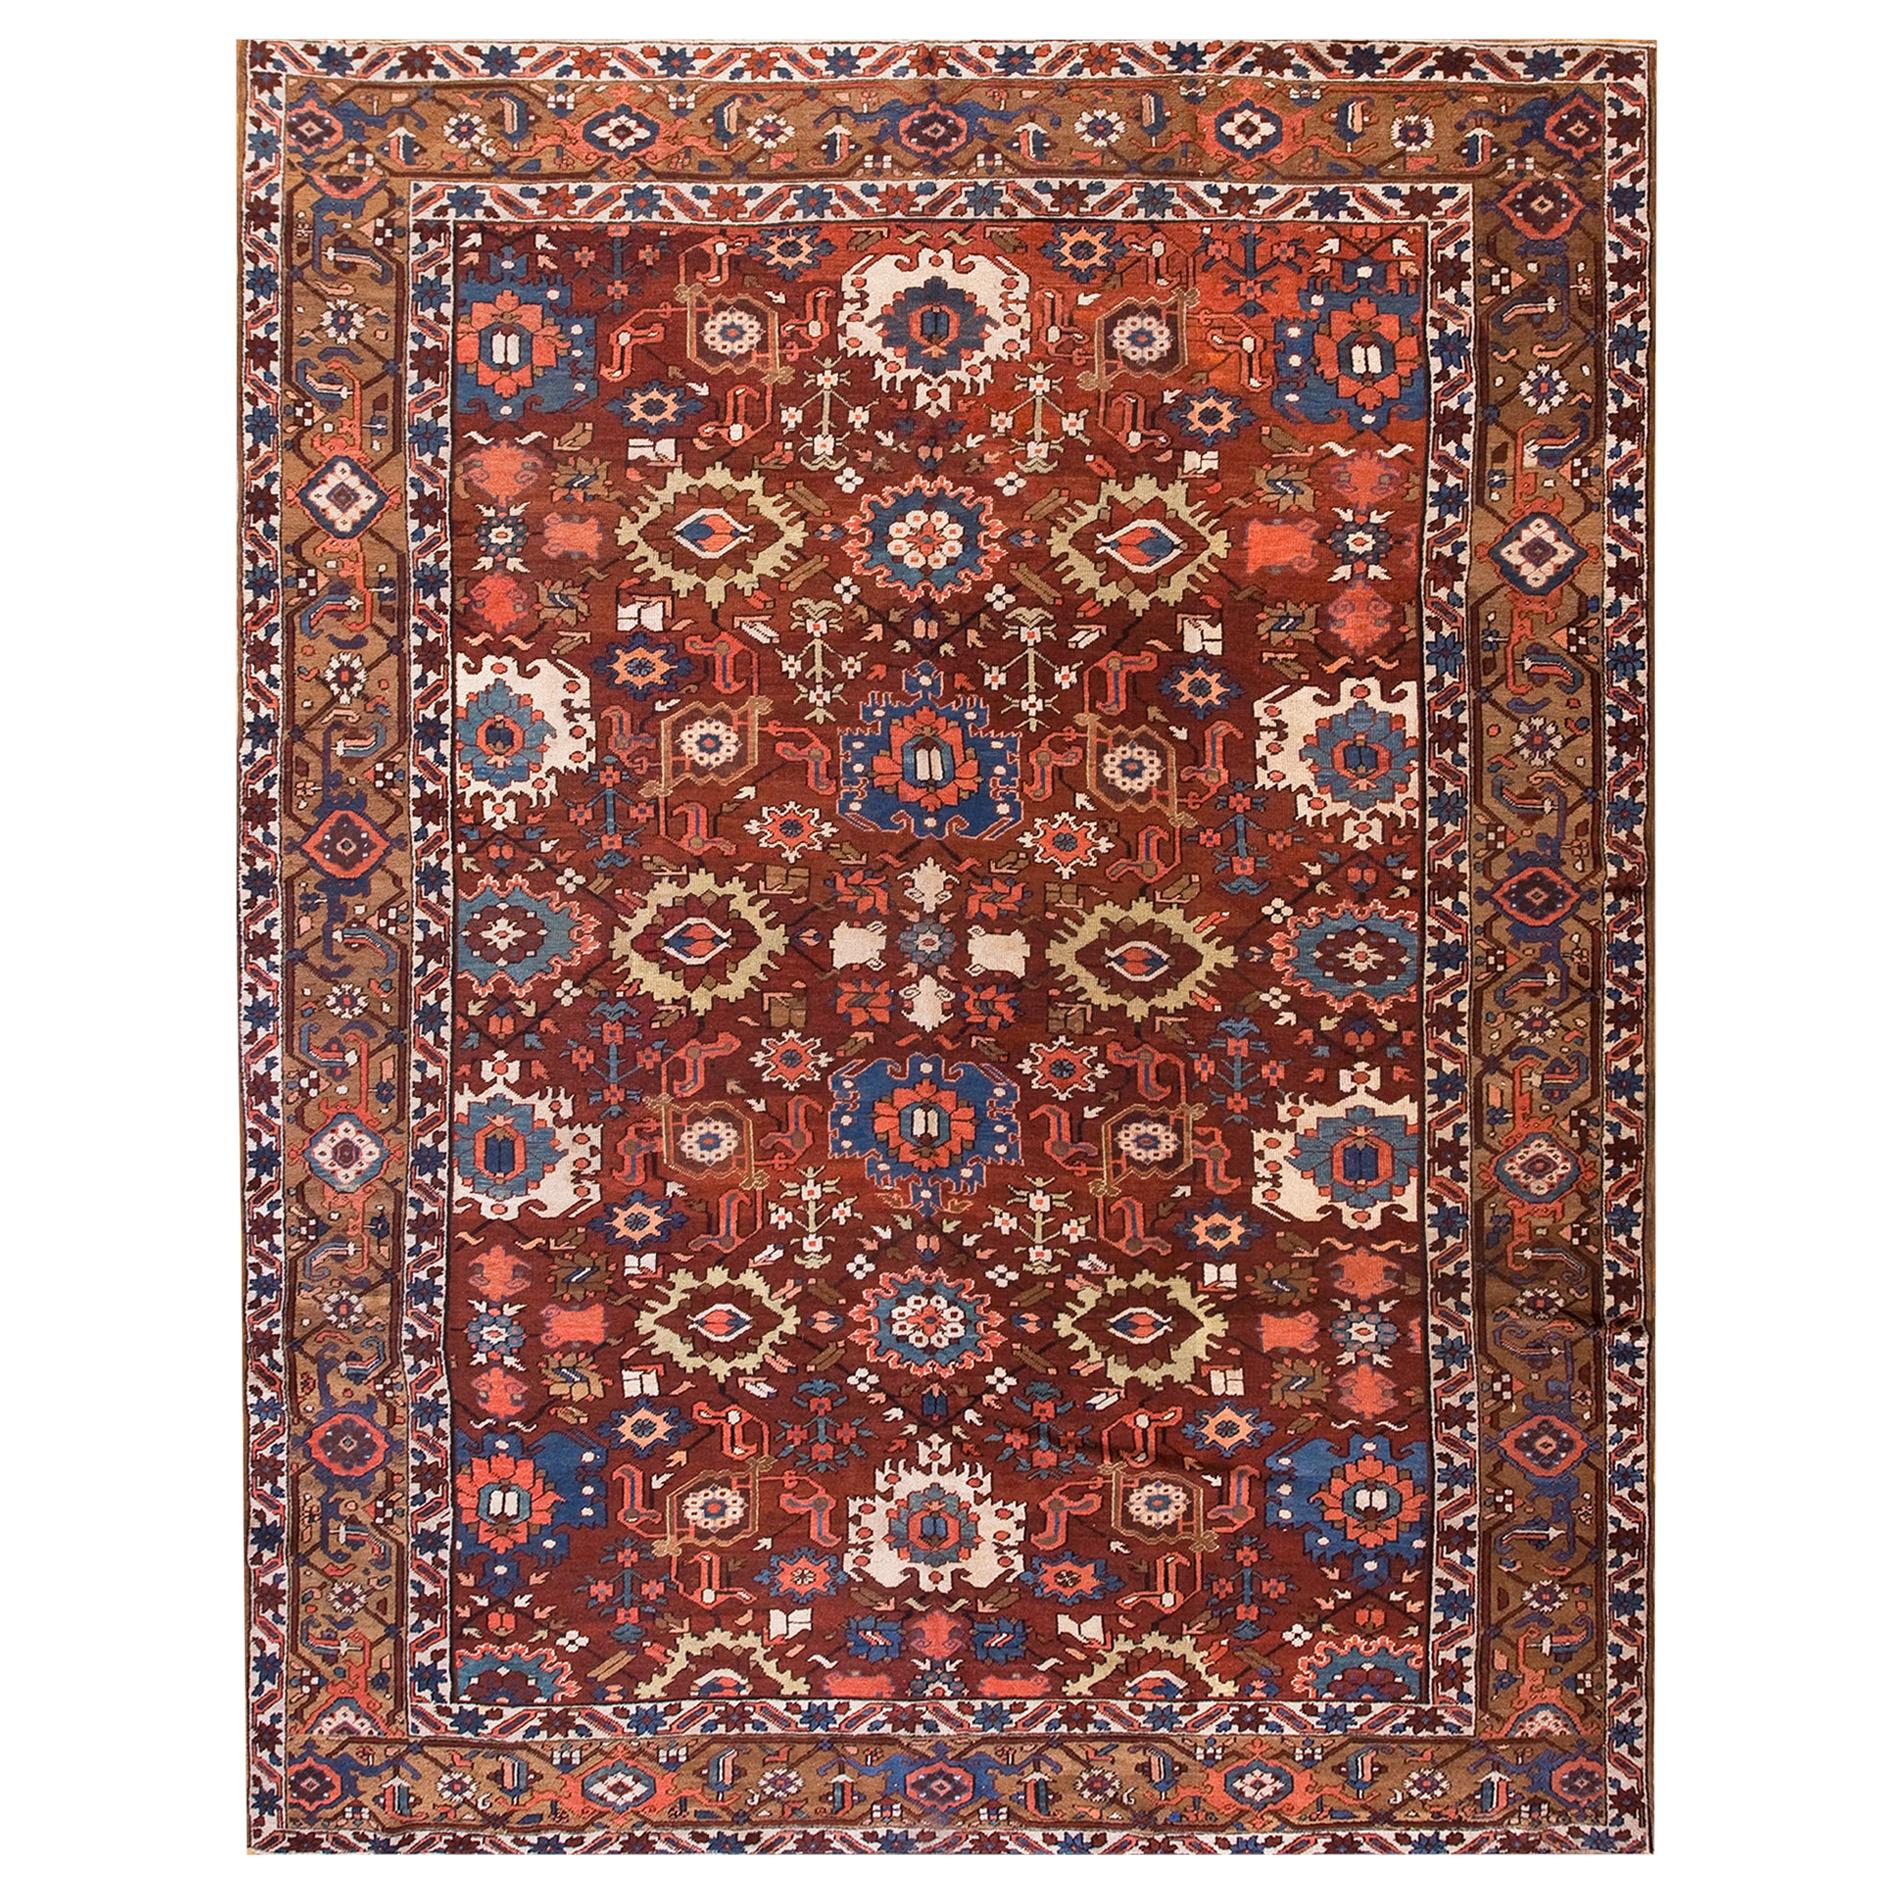 Late 19th Century N.W. Persian Heriz Carpet ( 9'3" x 12' - 282 x 366 )